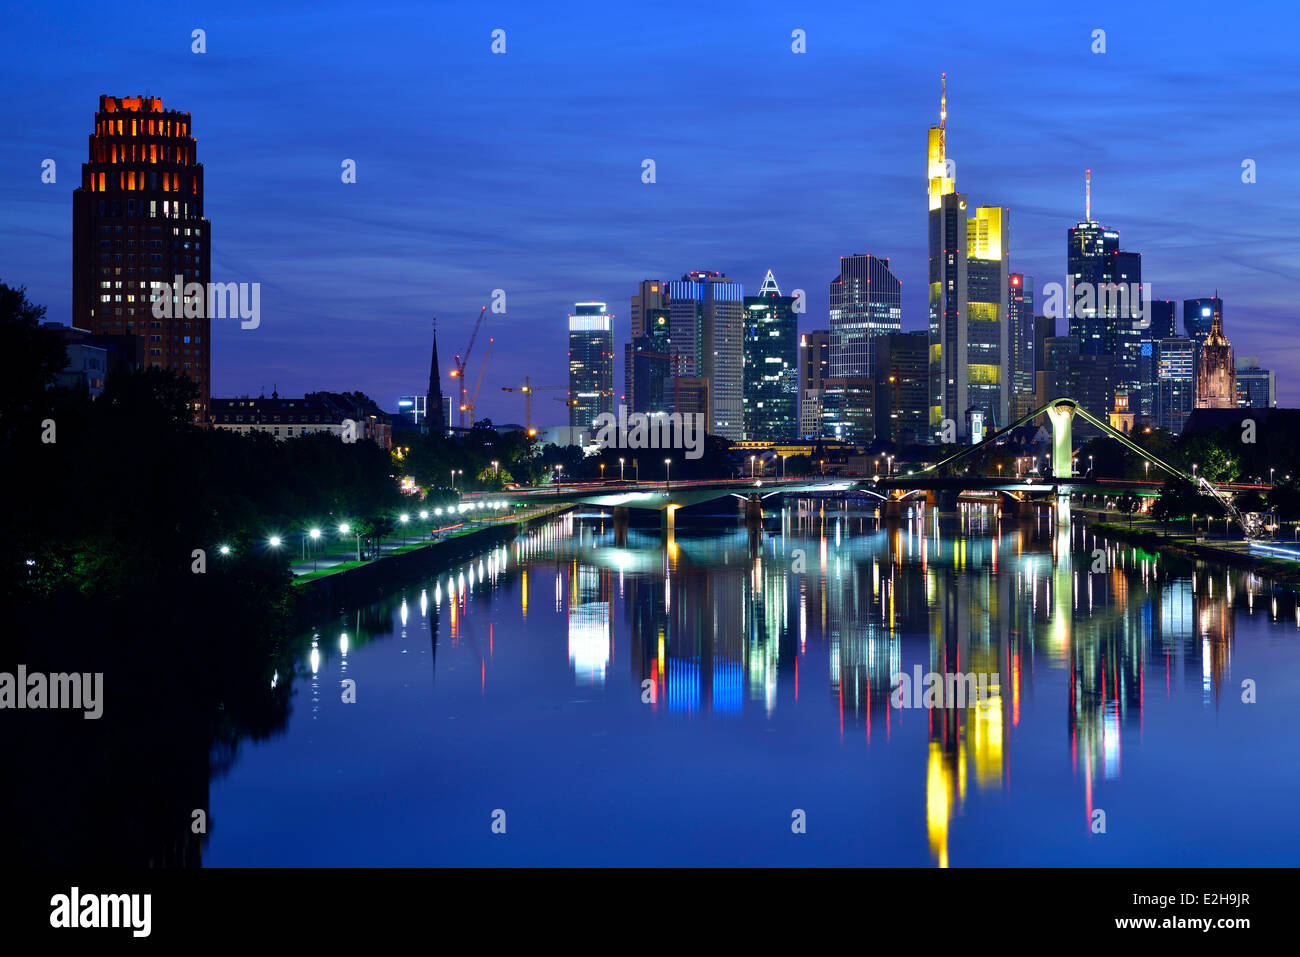 Skyline at night, Lindner Main Plaza Tower, TaunusTurm, Tower 185, Commerzbank, Messeturm, ECB, European Central Bank, Helaba Stock Photo